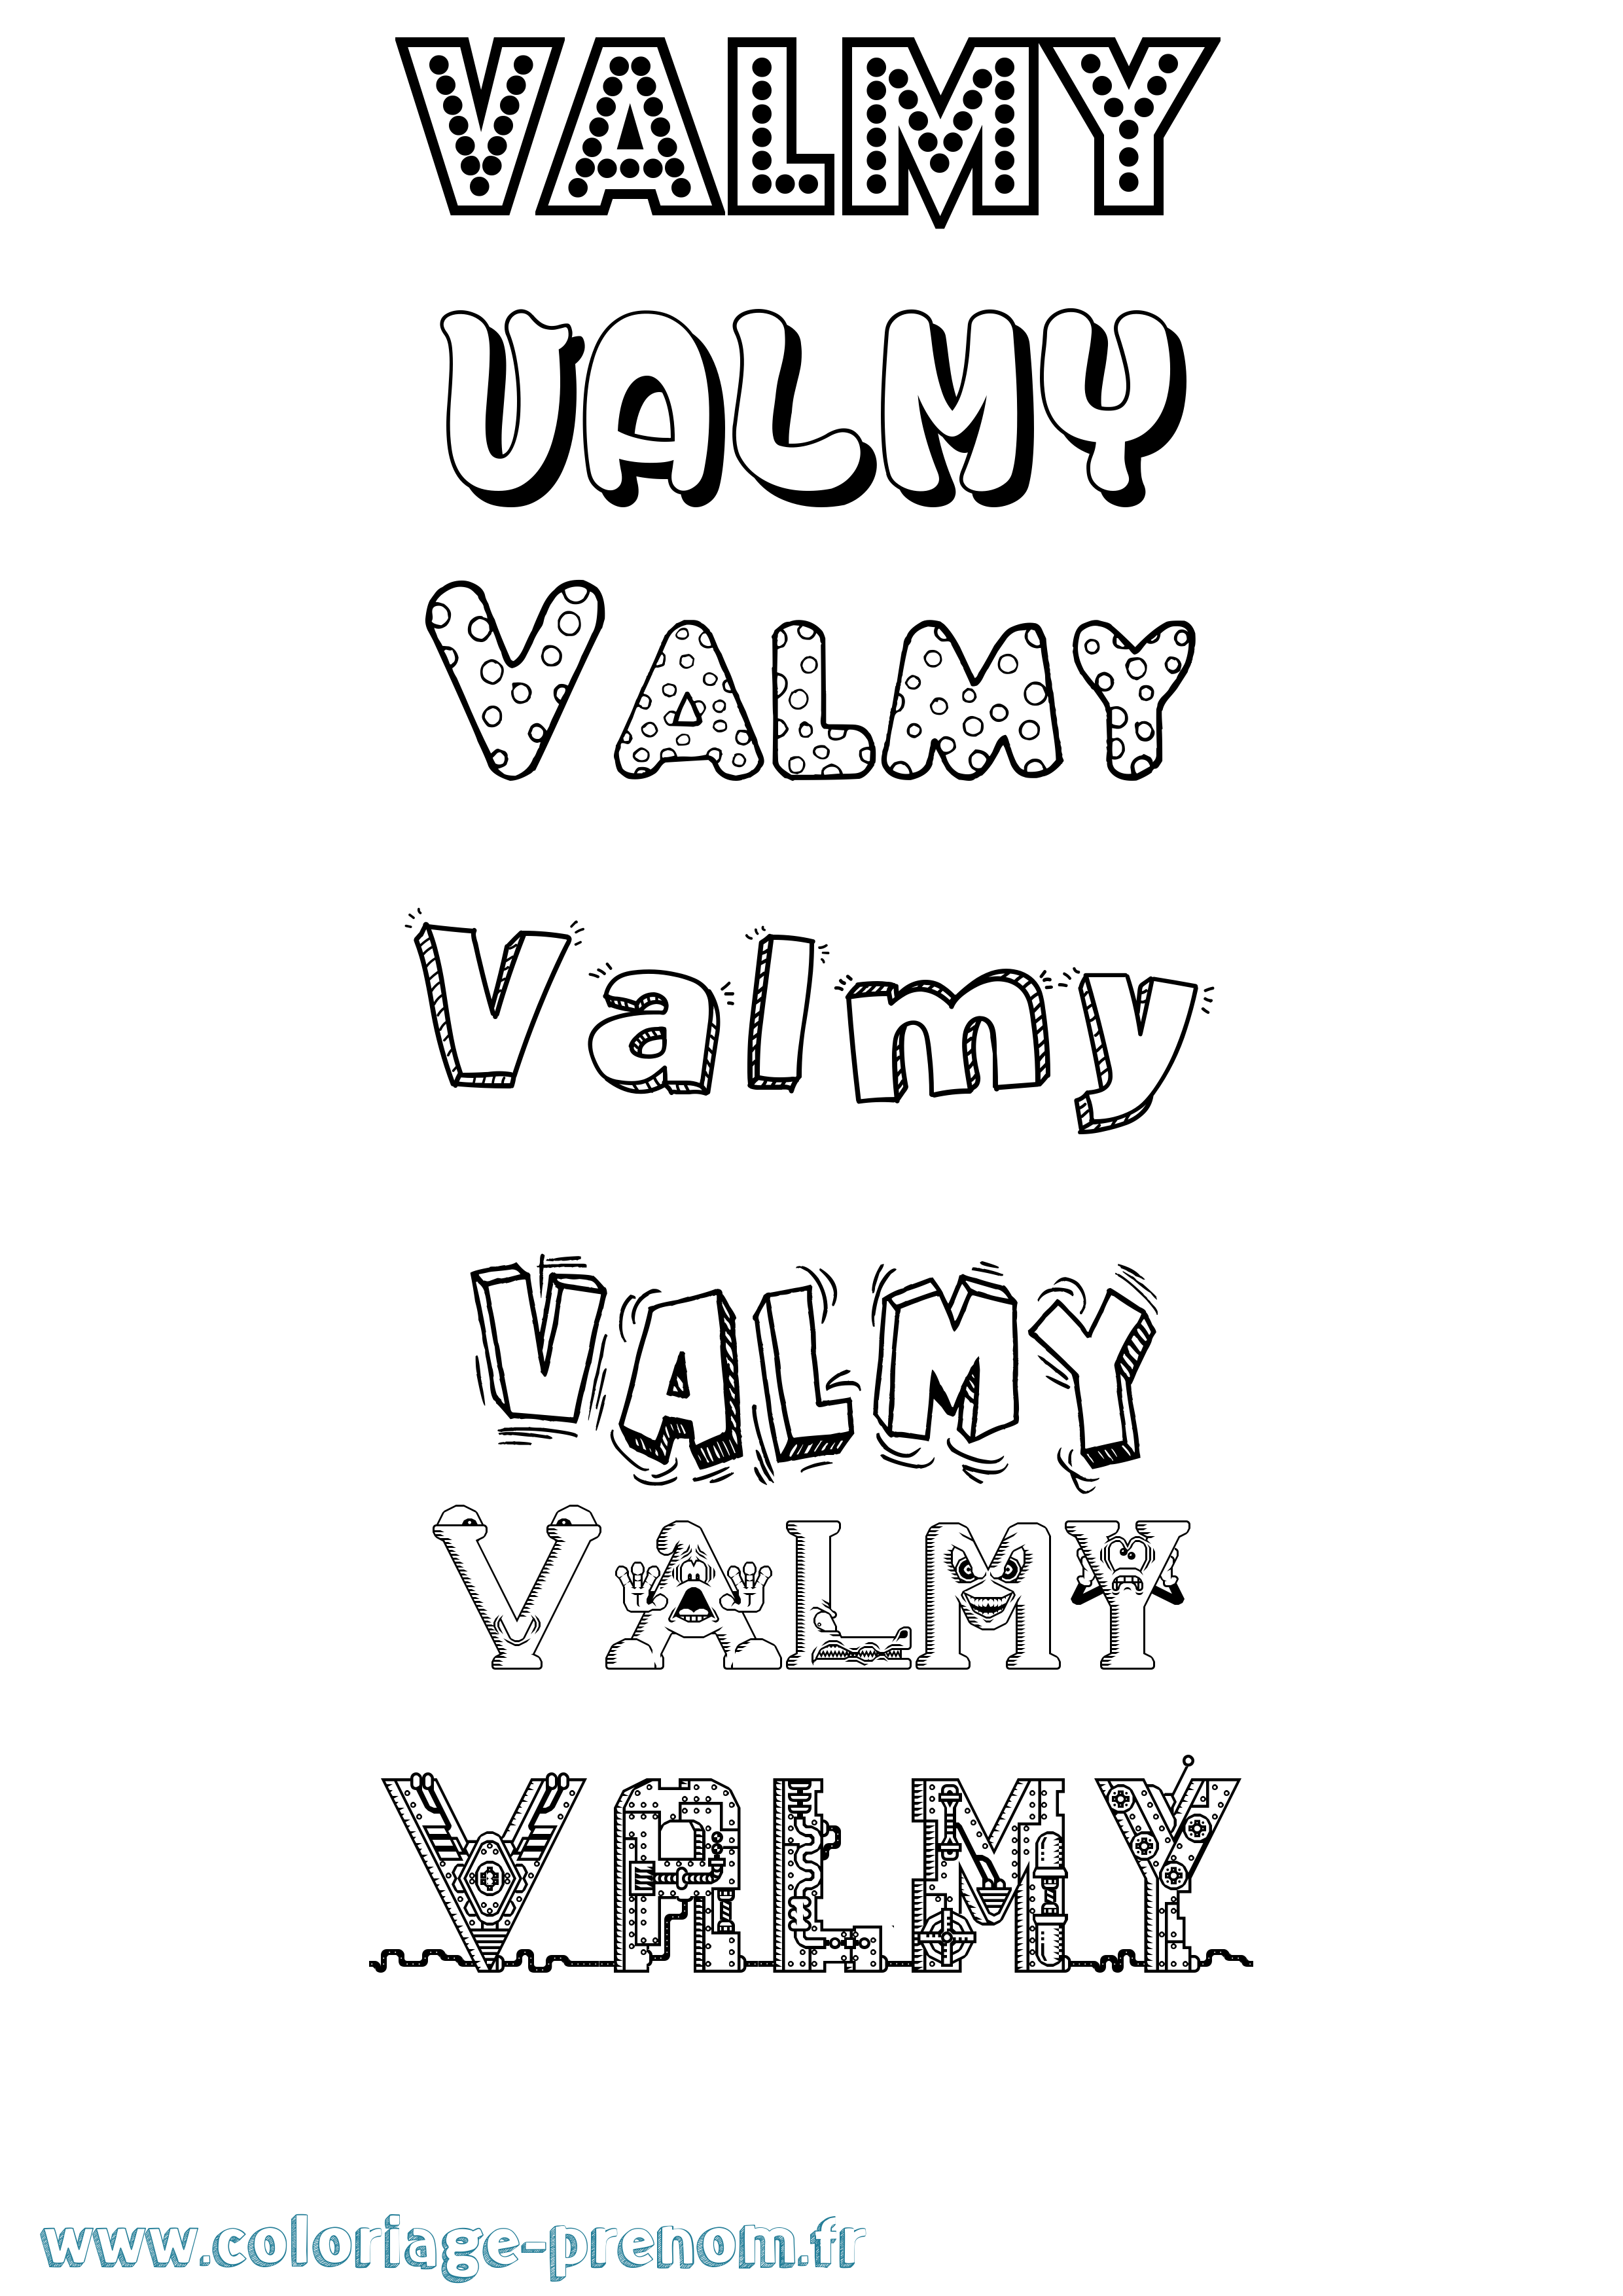 Coloriage prénom Valmy Fun